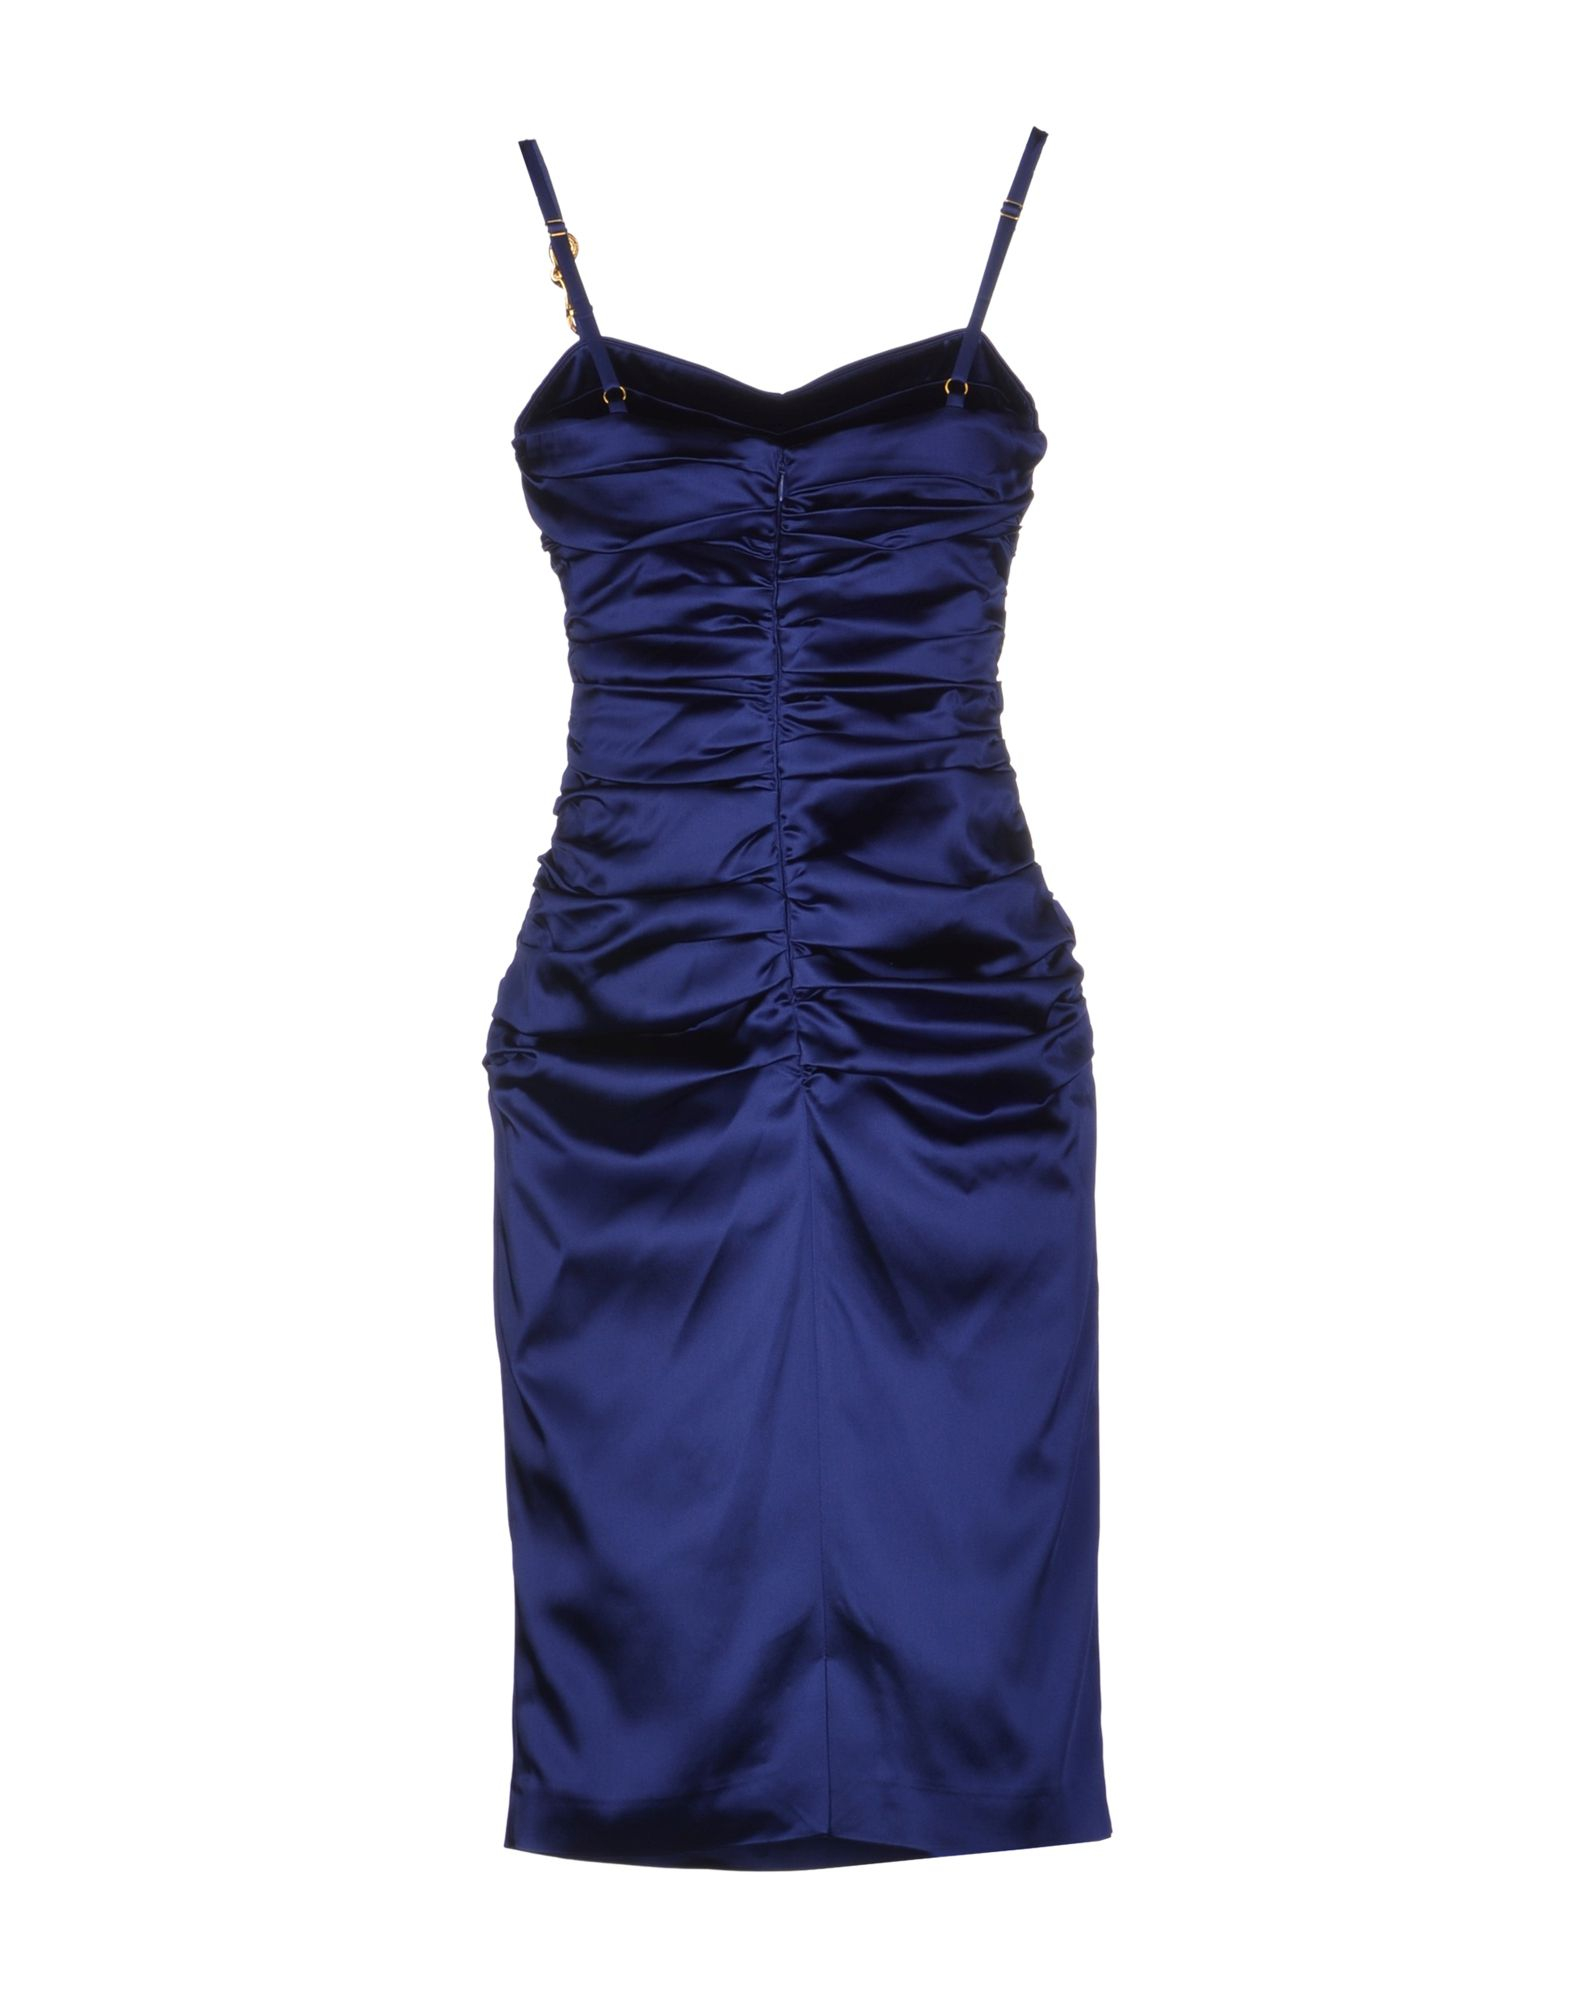 Lyst - Class roberto cavalli Knee-length Dress in Blue